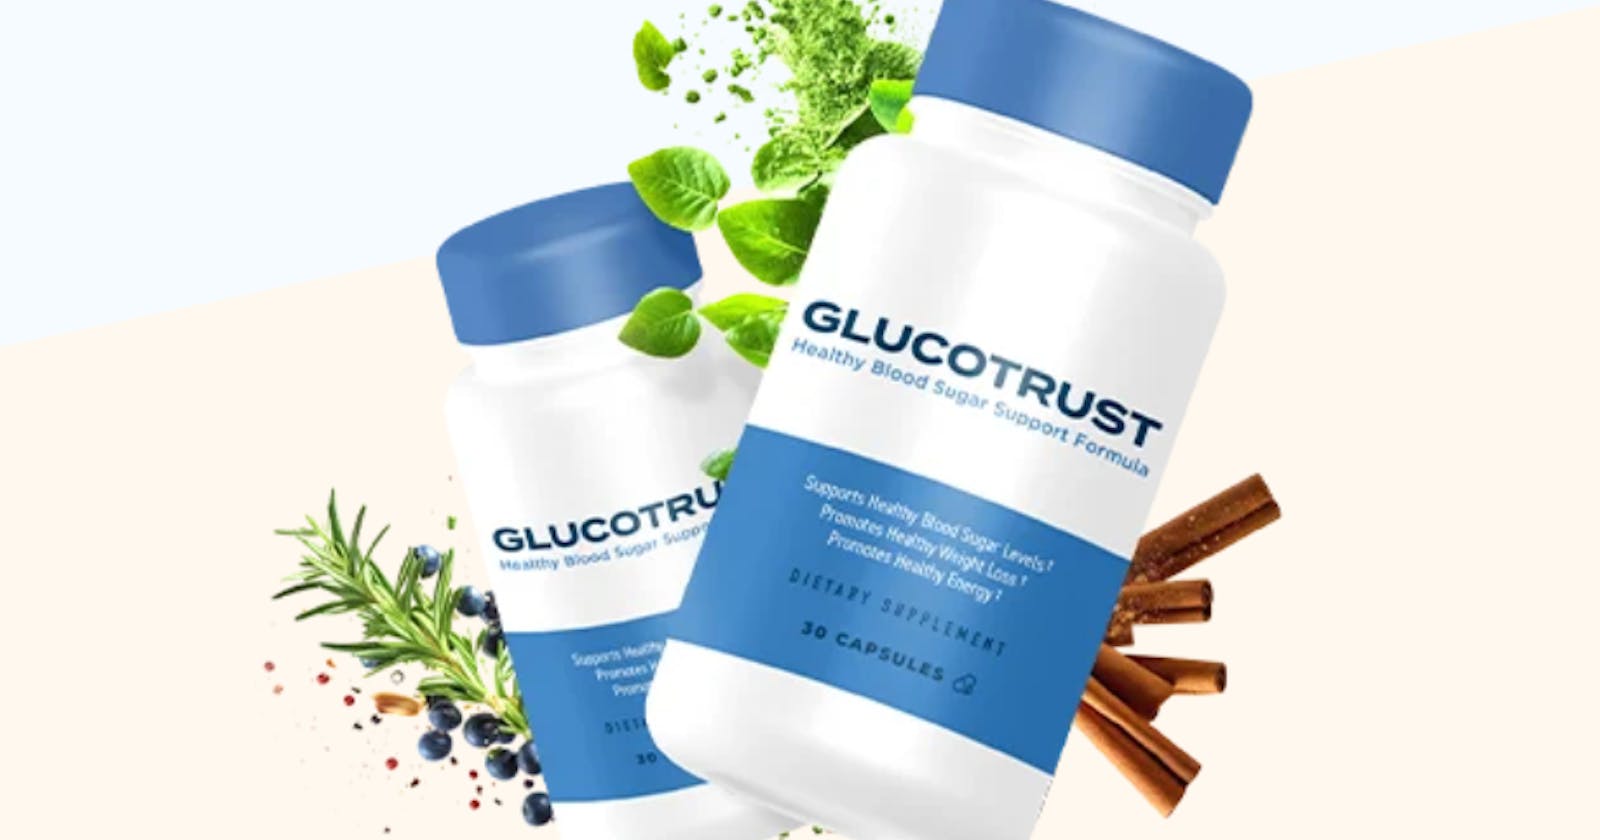 GlucoTrust Reviews - Scam Exposed Or Legit Blood Sugar Supplement?